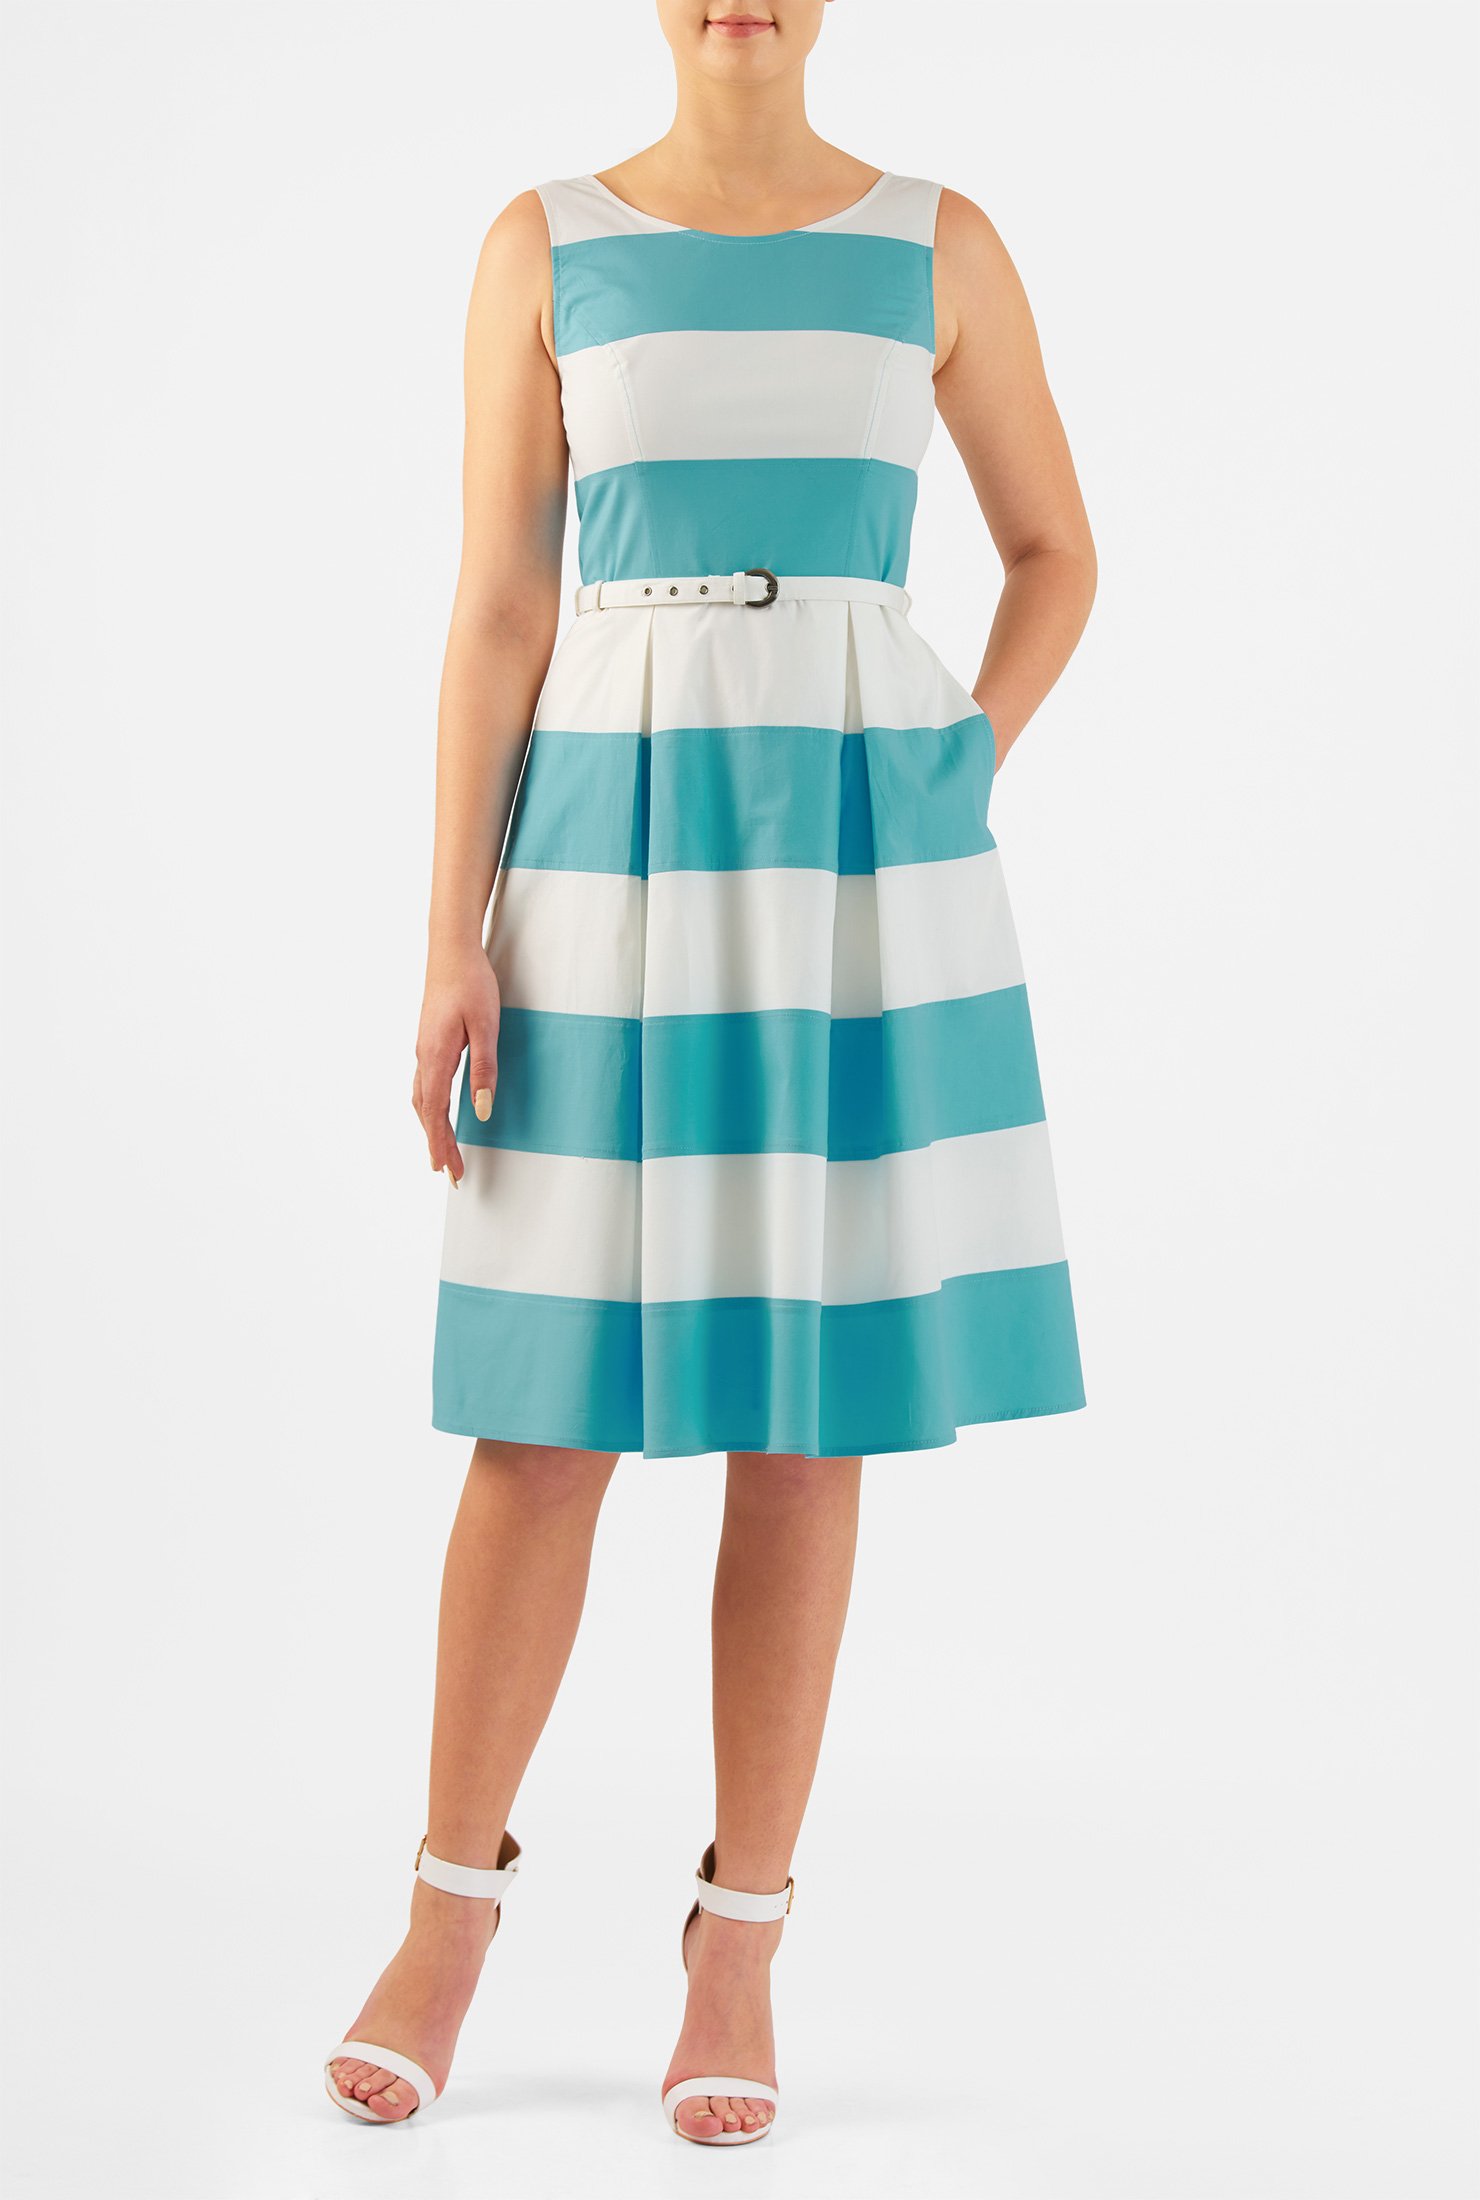 Shop Banded stripe poplin dress | eShakti